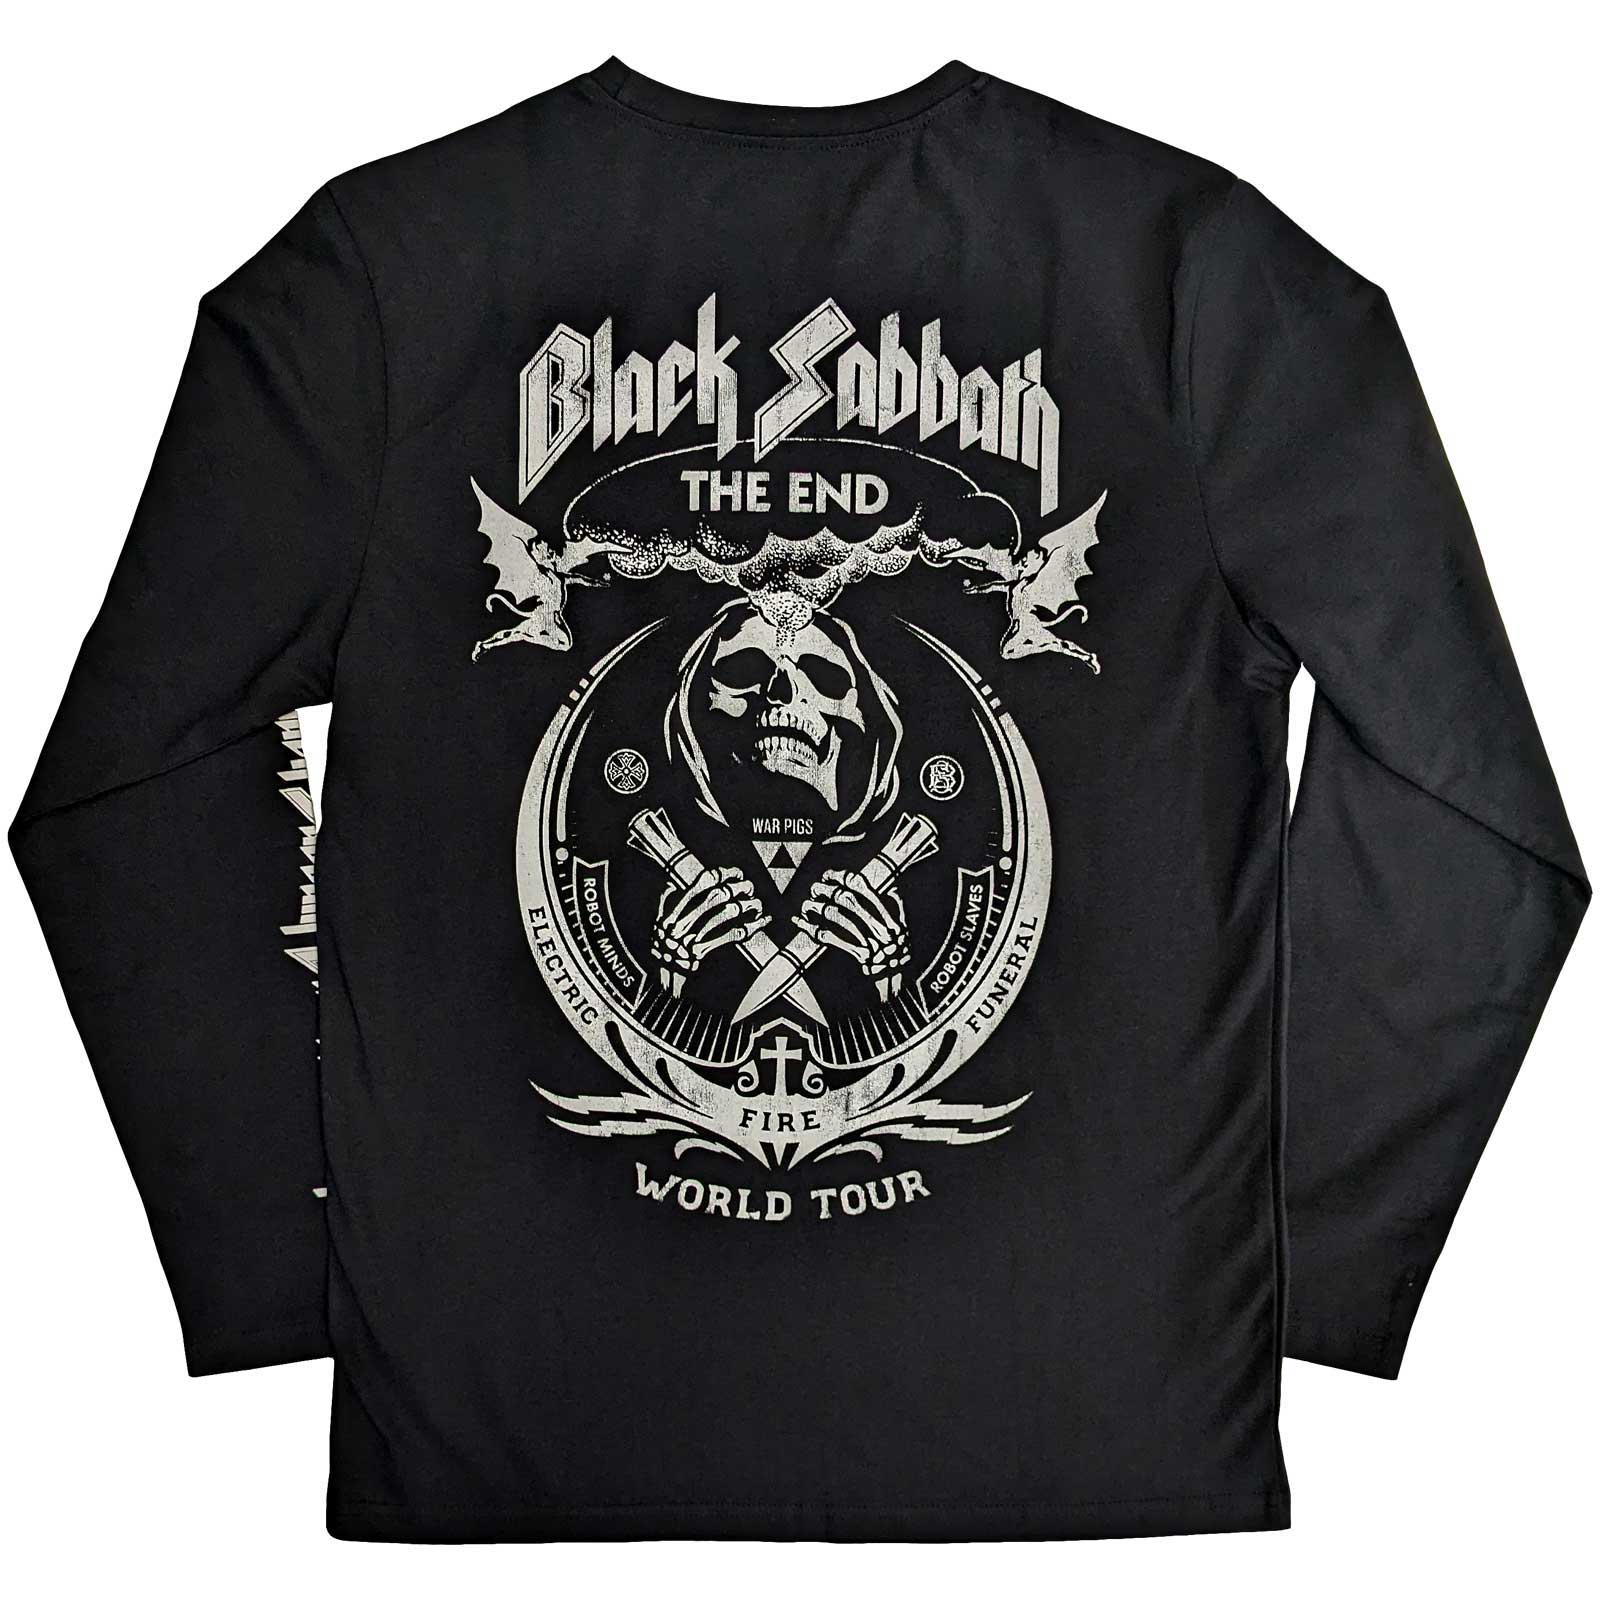 Black Sabbath Long Sleeve T-Shirt -The End Mushroom Cloud - Unisex Official Licensed Design